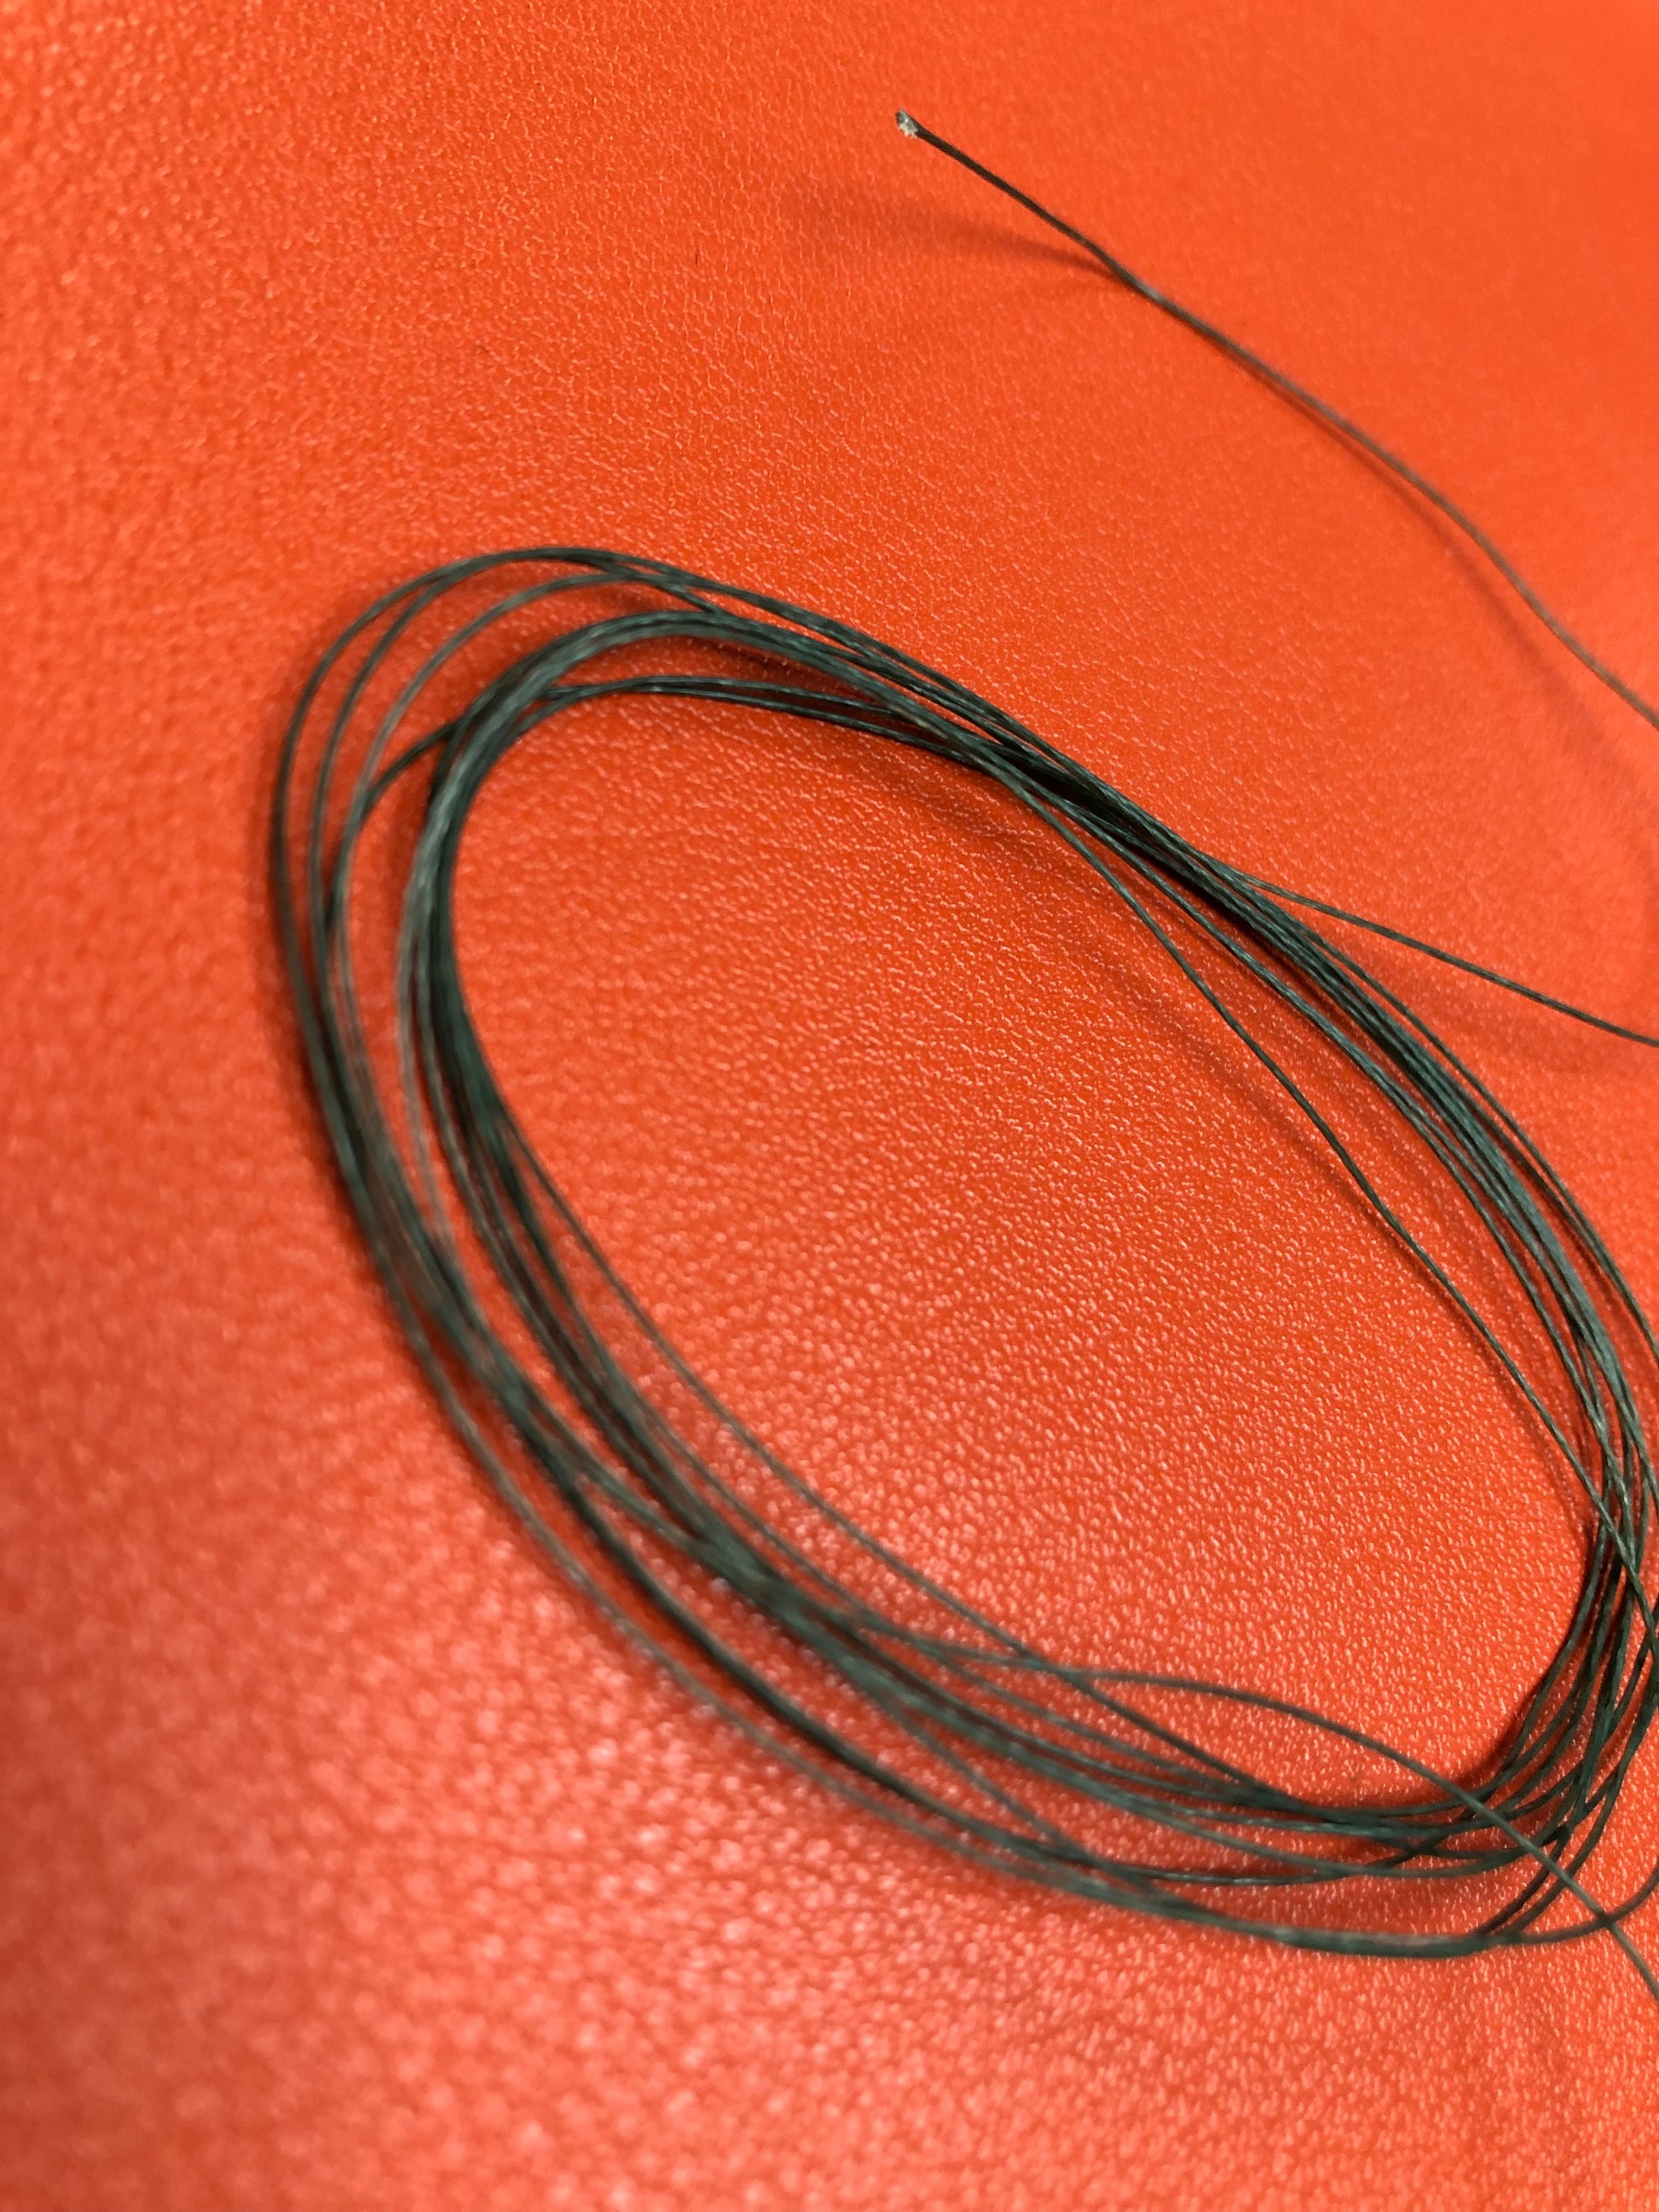 Spider Wire for Articulation – charliesflybox